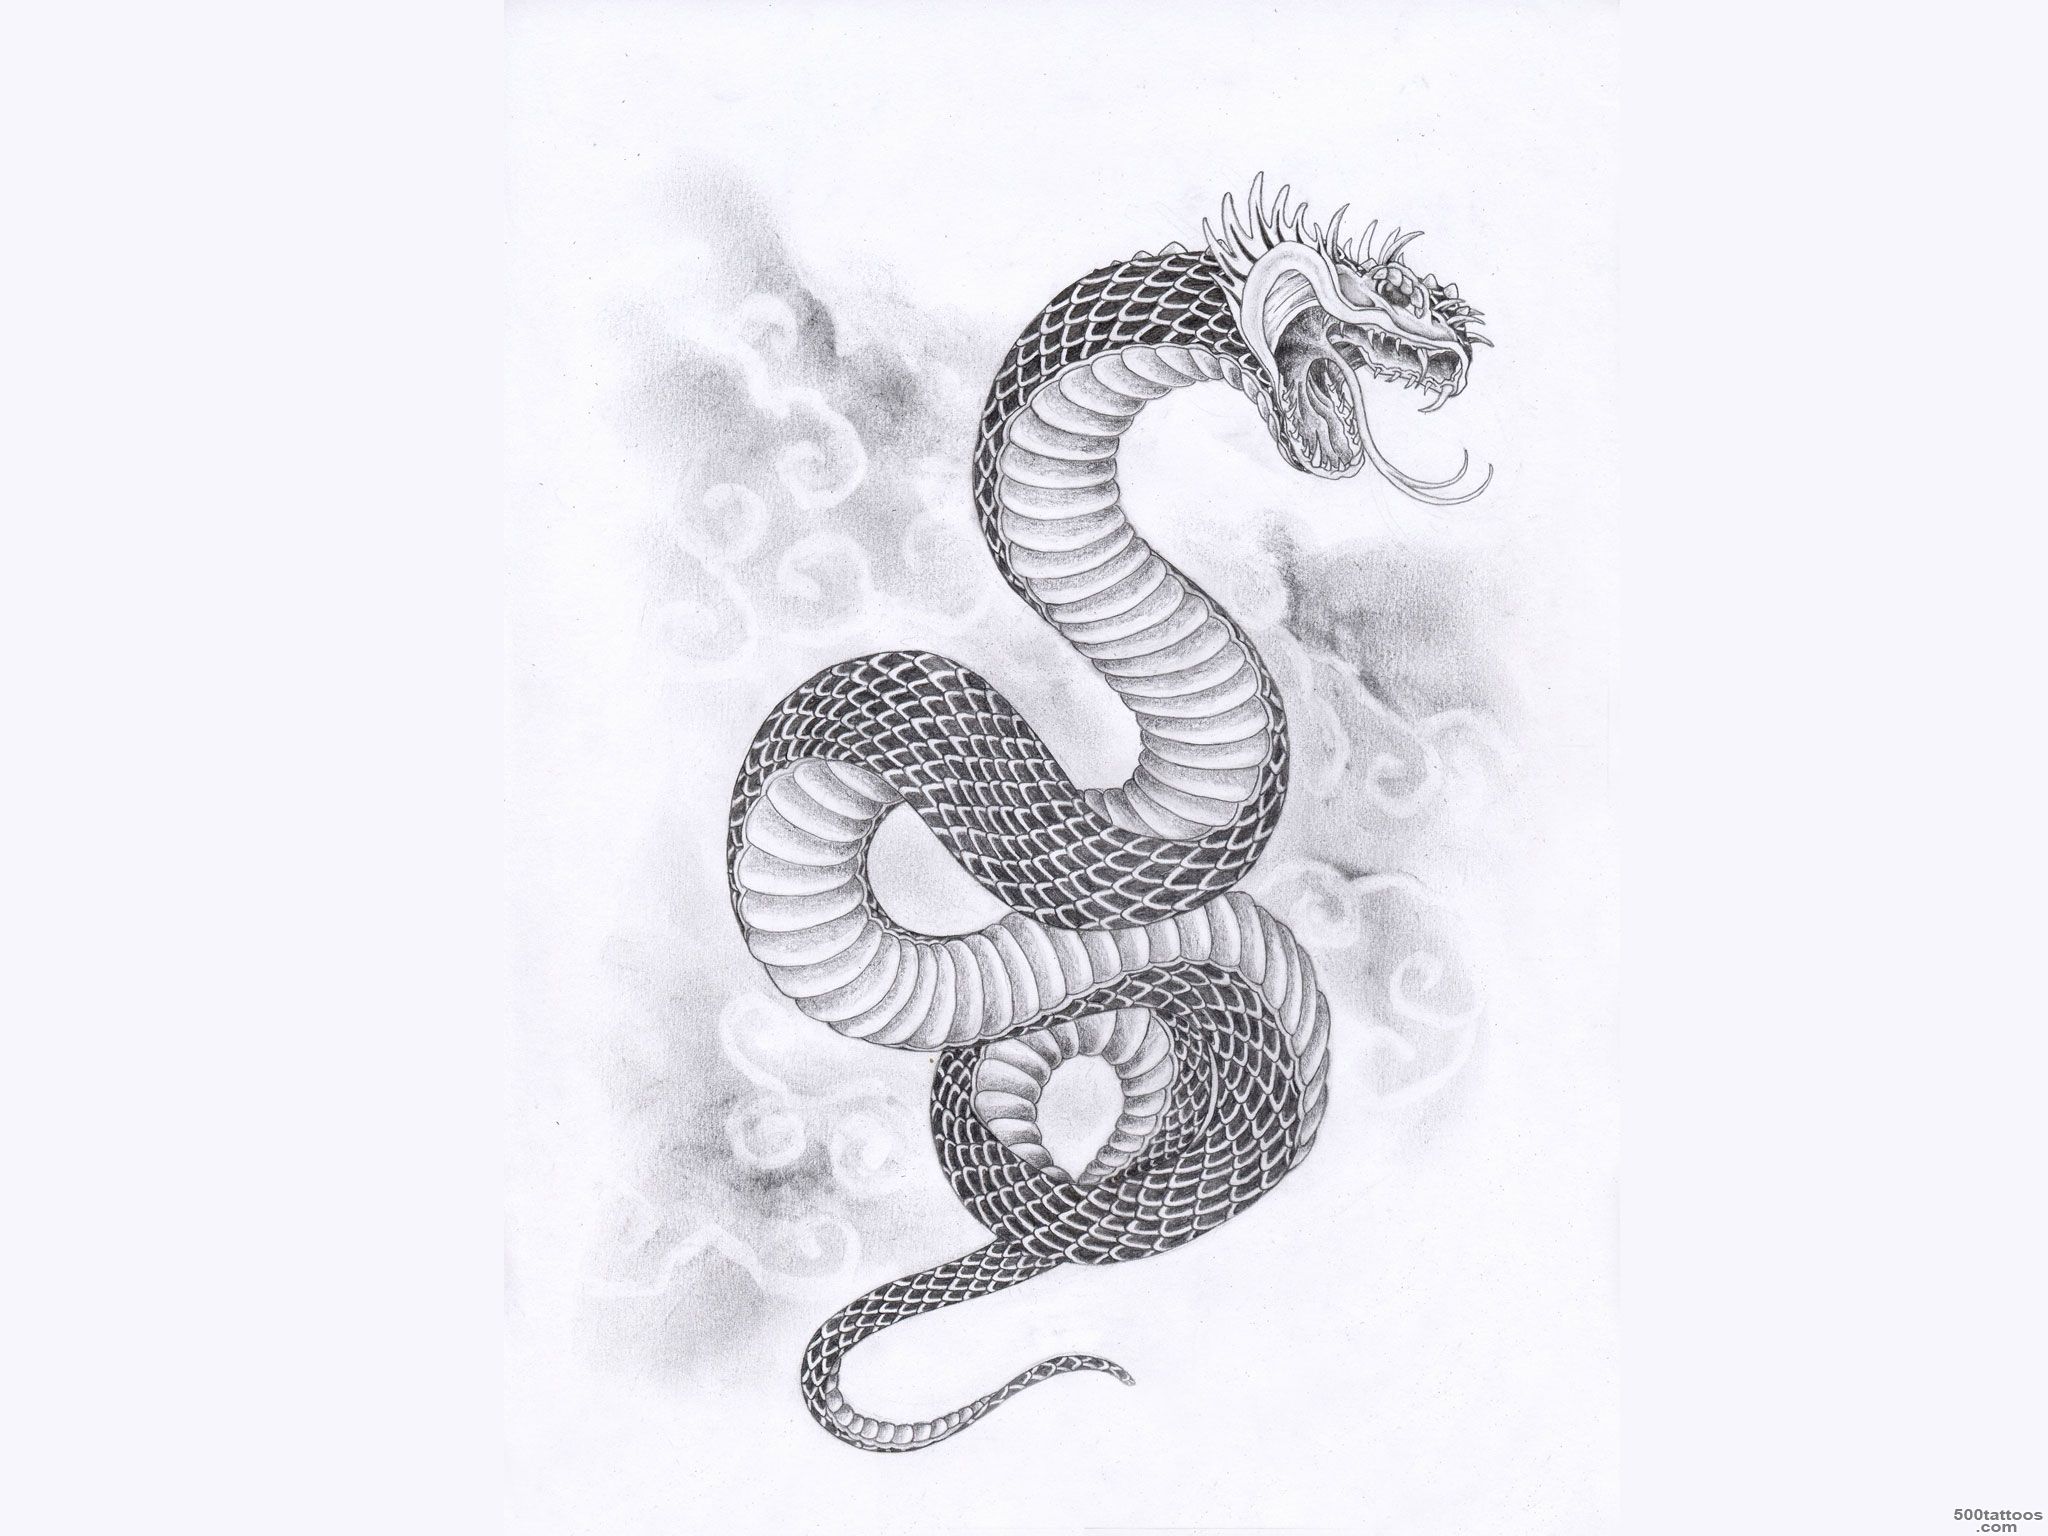 Sword Heart And A Snake Tattoo   Tattoes Idea 2015  2016_4